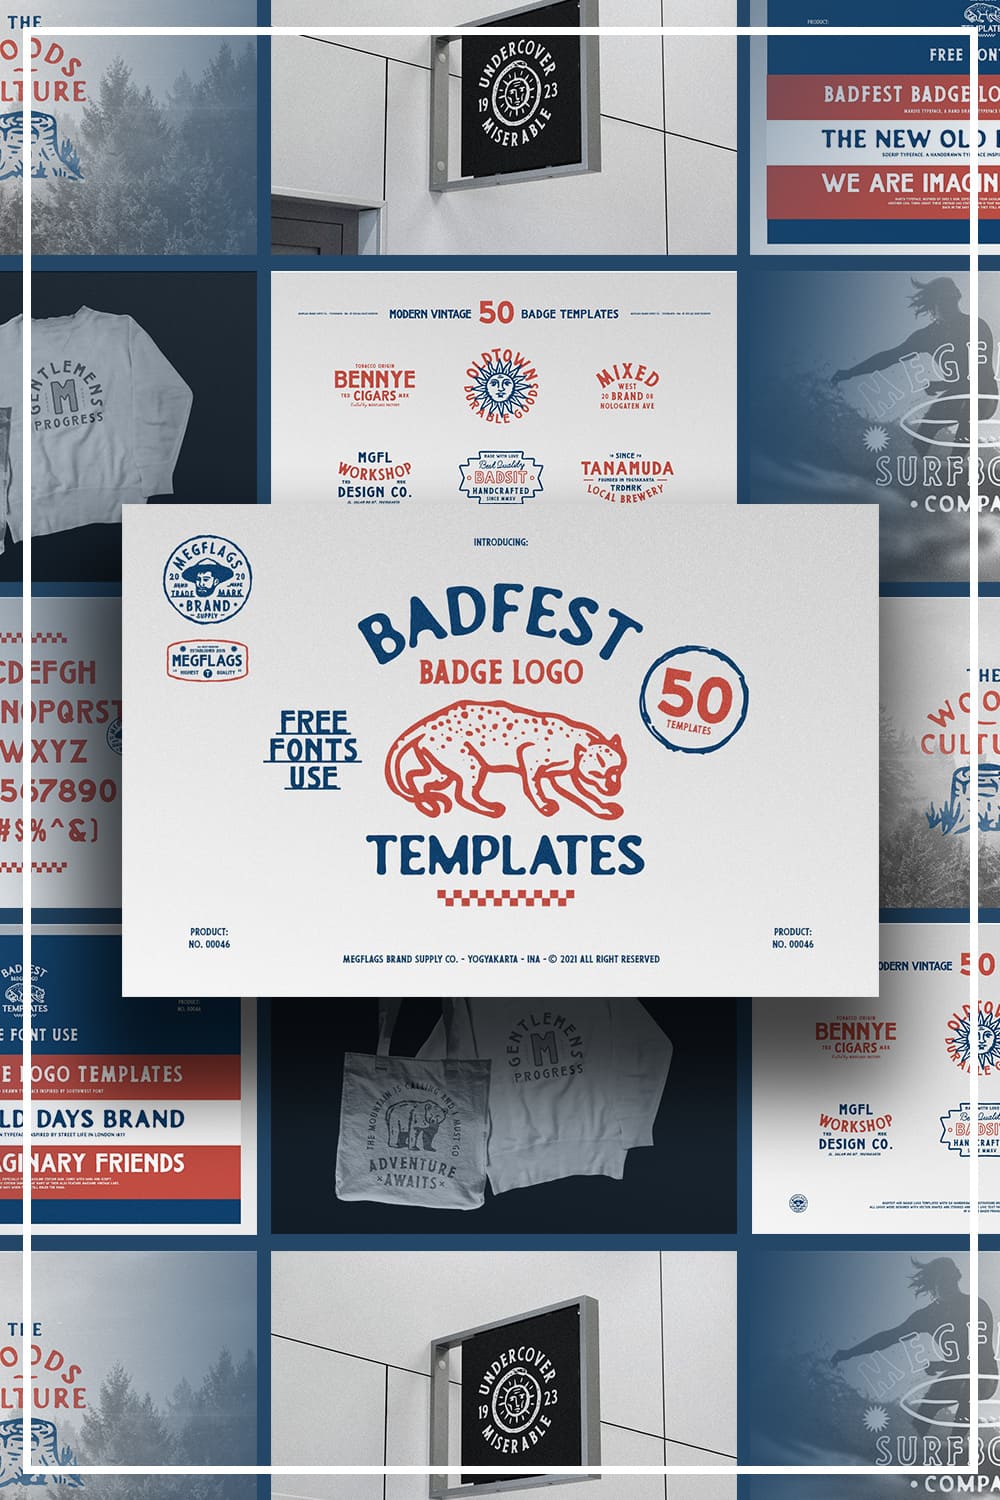 badfest 50 badgelogo templates pinterest image.